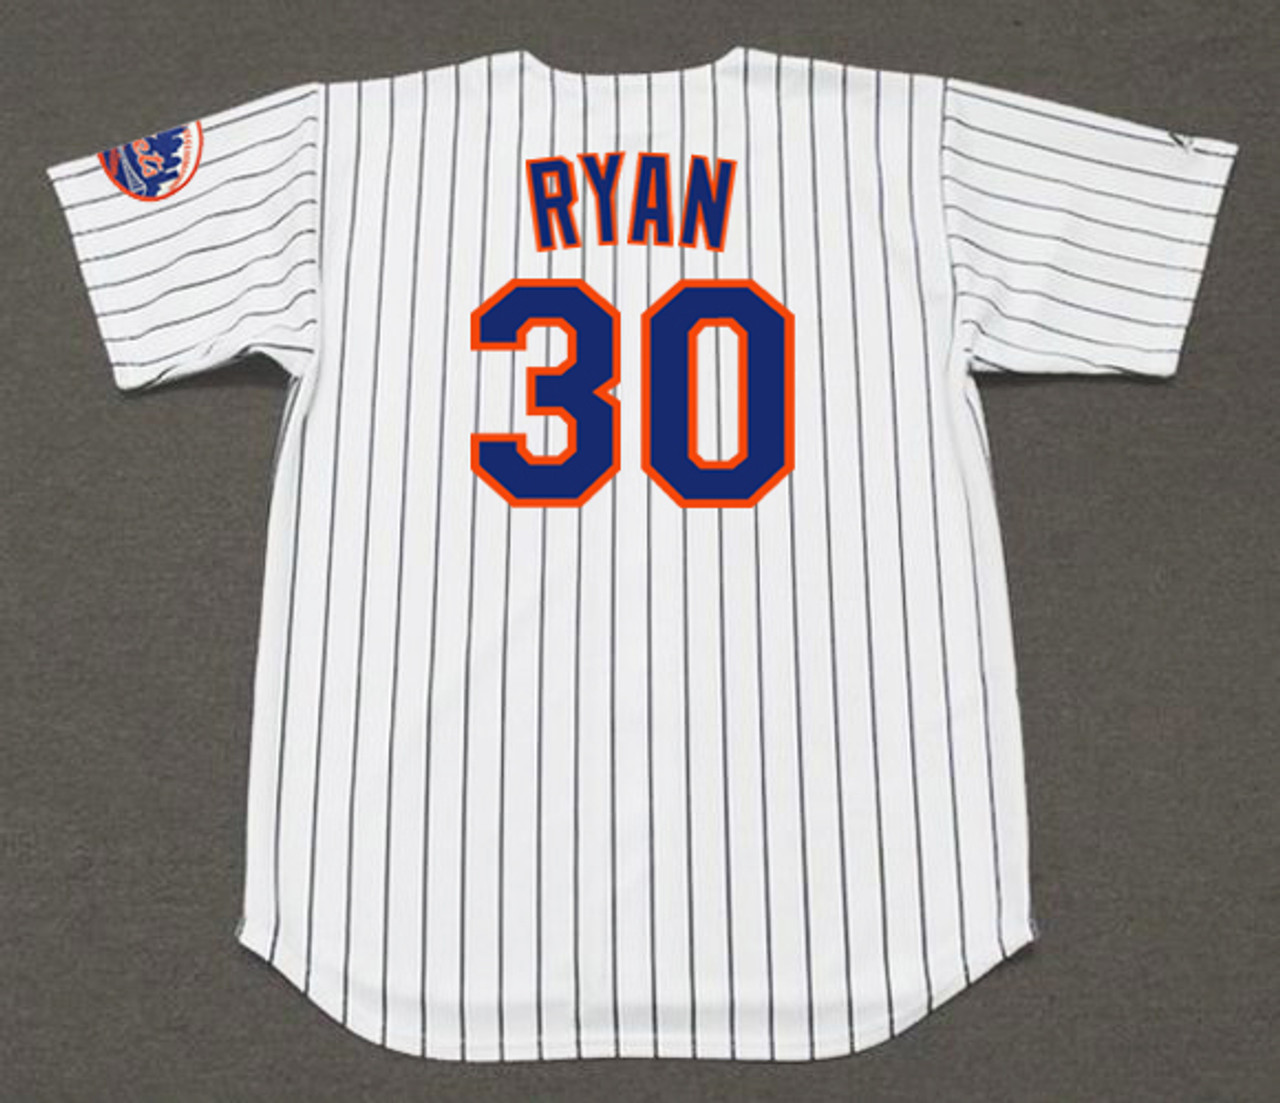 Nolan Ryan New York Mets MLB Jerseys for sale